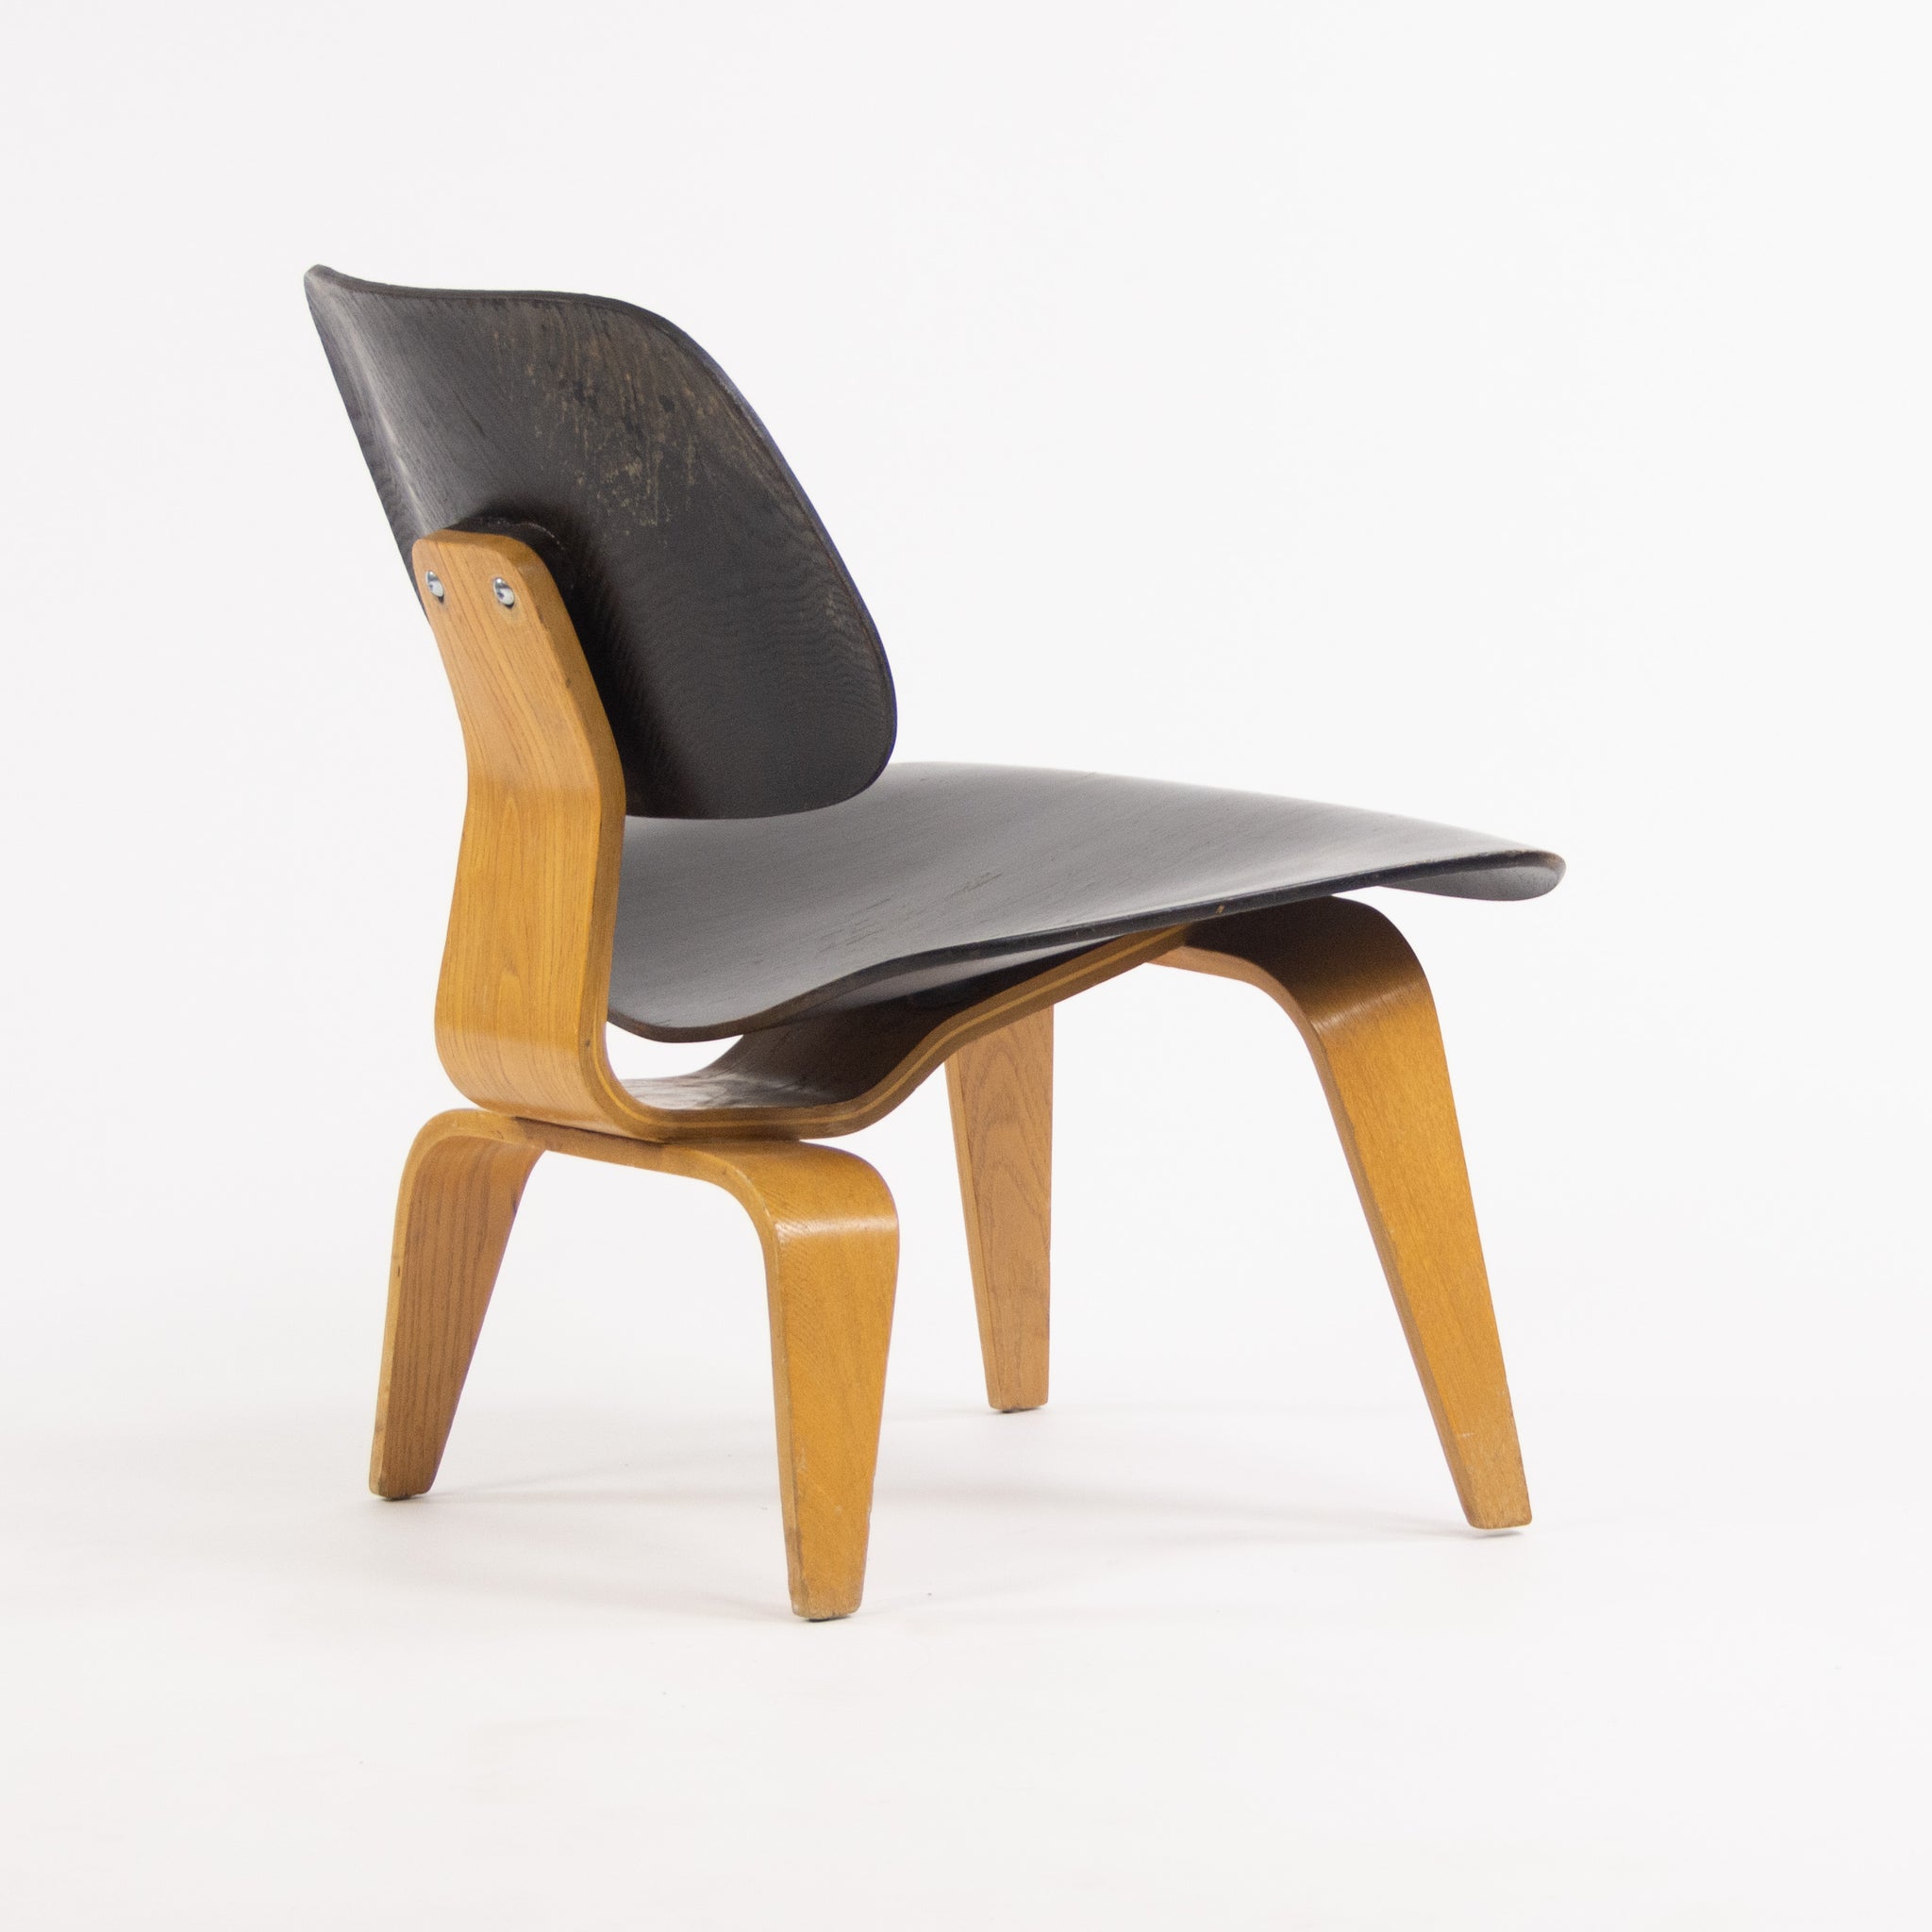 SOLD 1953 Rare Eames Herman Miller LCW Lounge Chair Wood Calico Ash Dual Tone Black